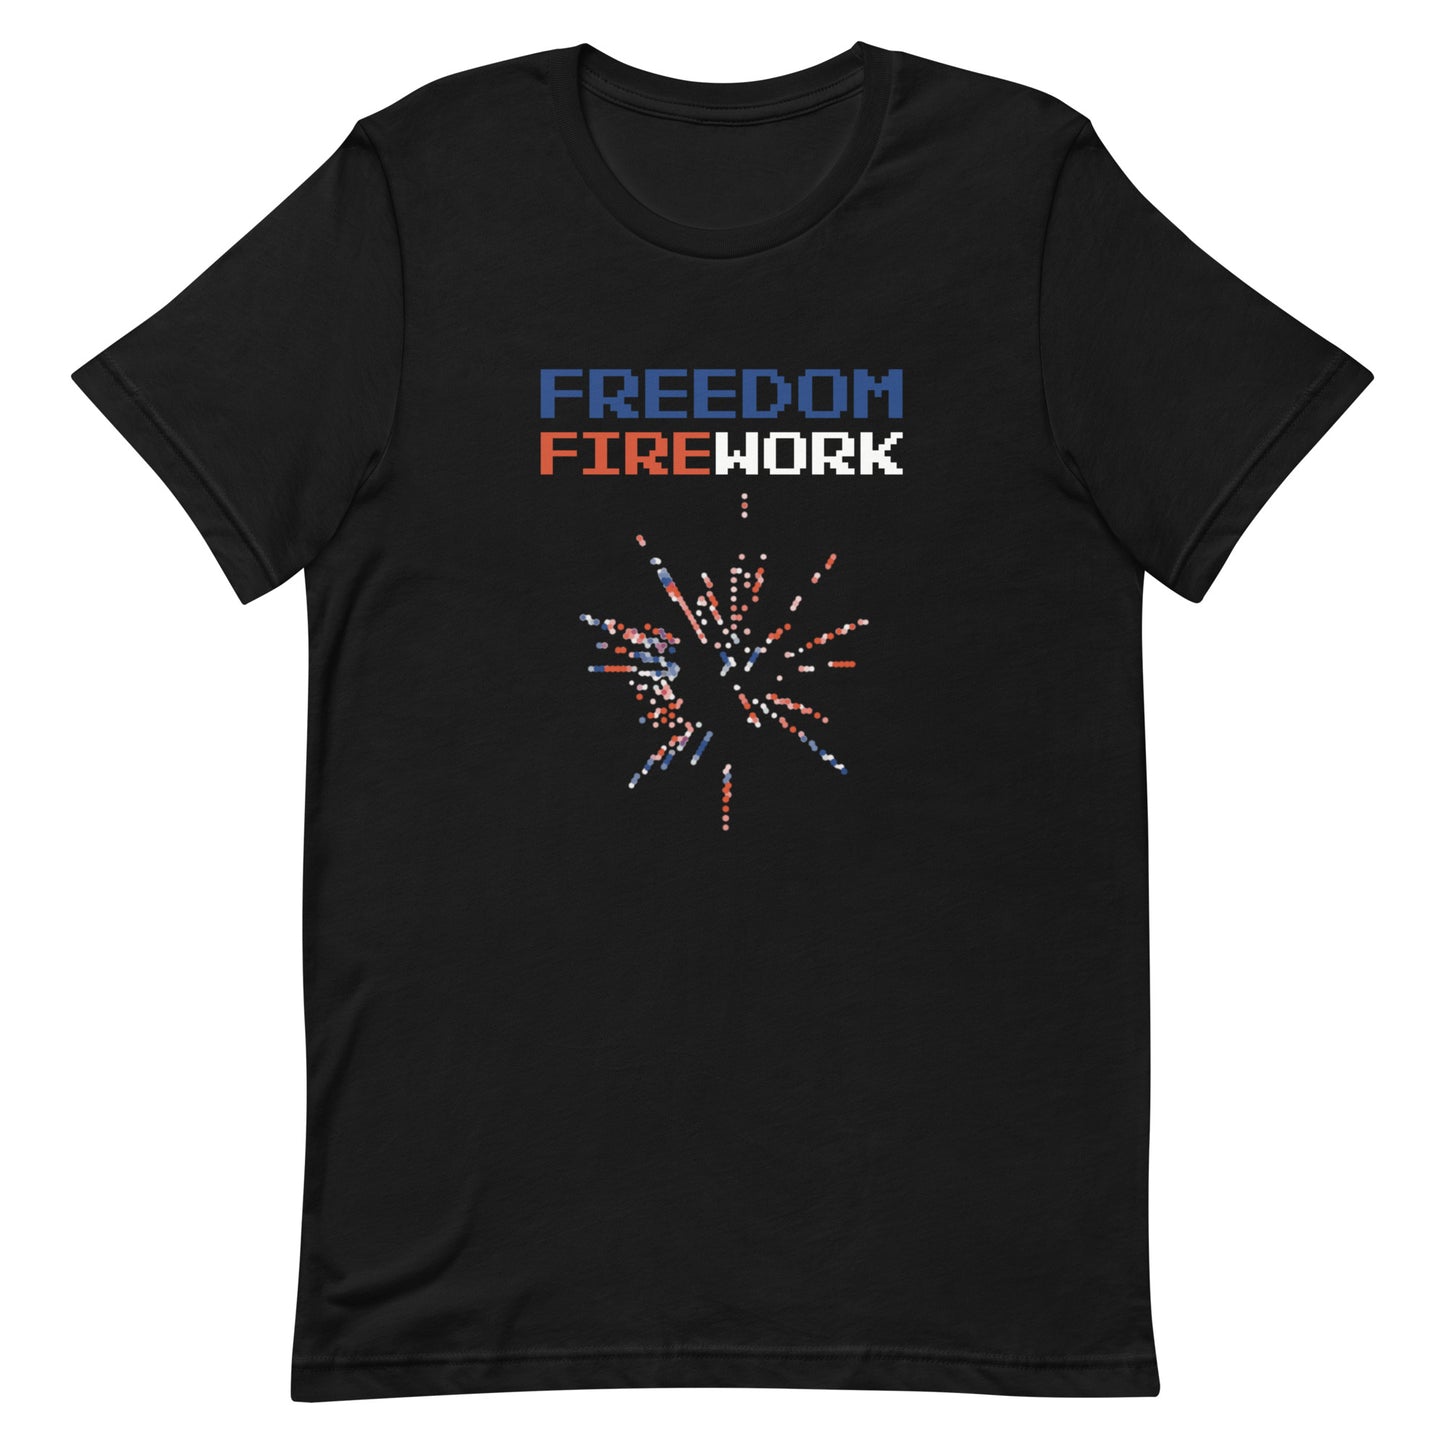 Freedom Firework T-shirt